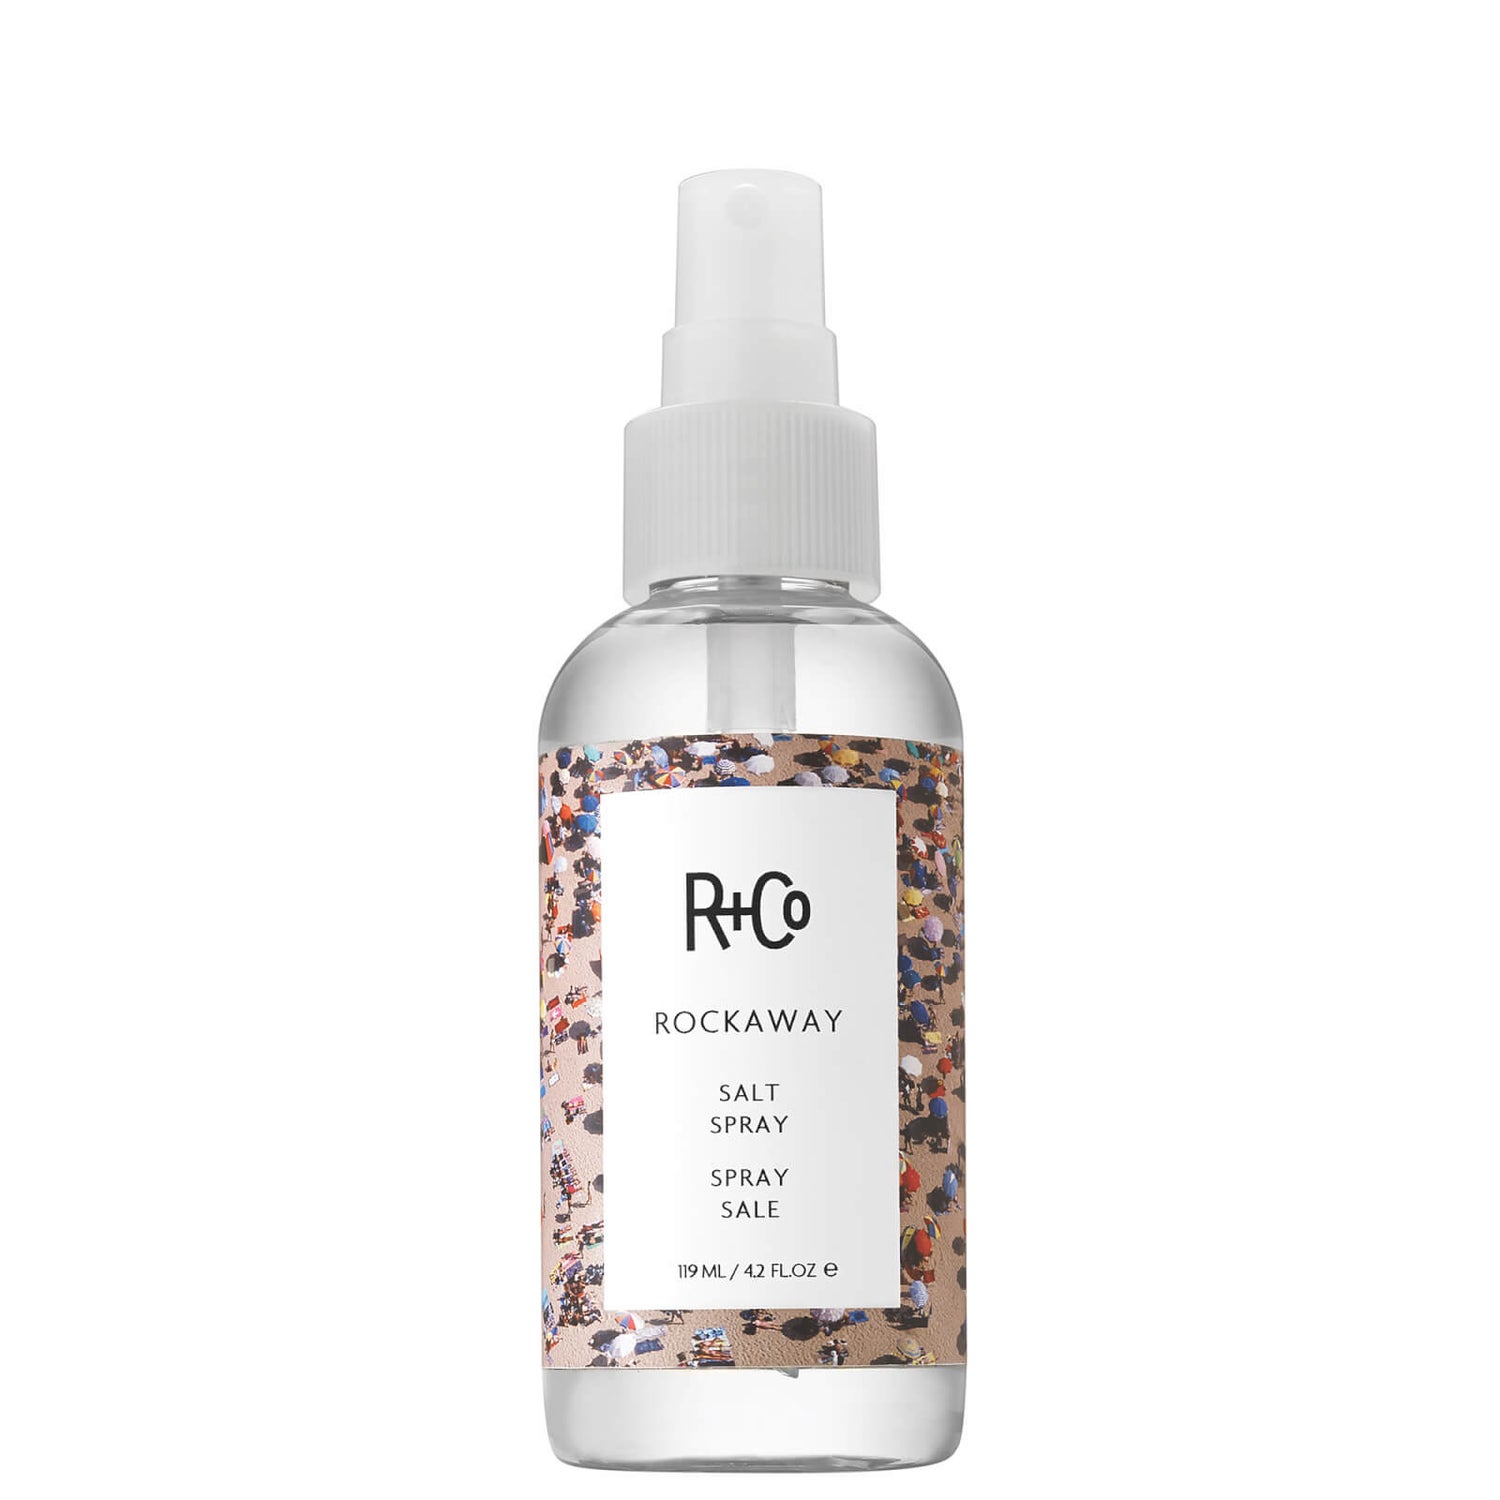 R+Co ROCKAWAY Salt Spray 4.2 fl. oz.